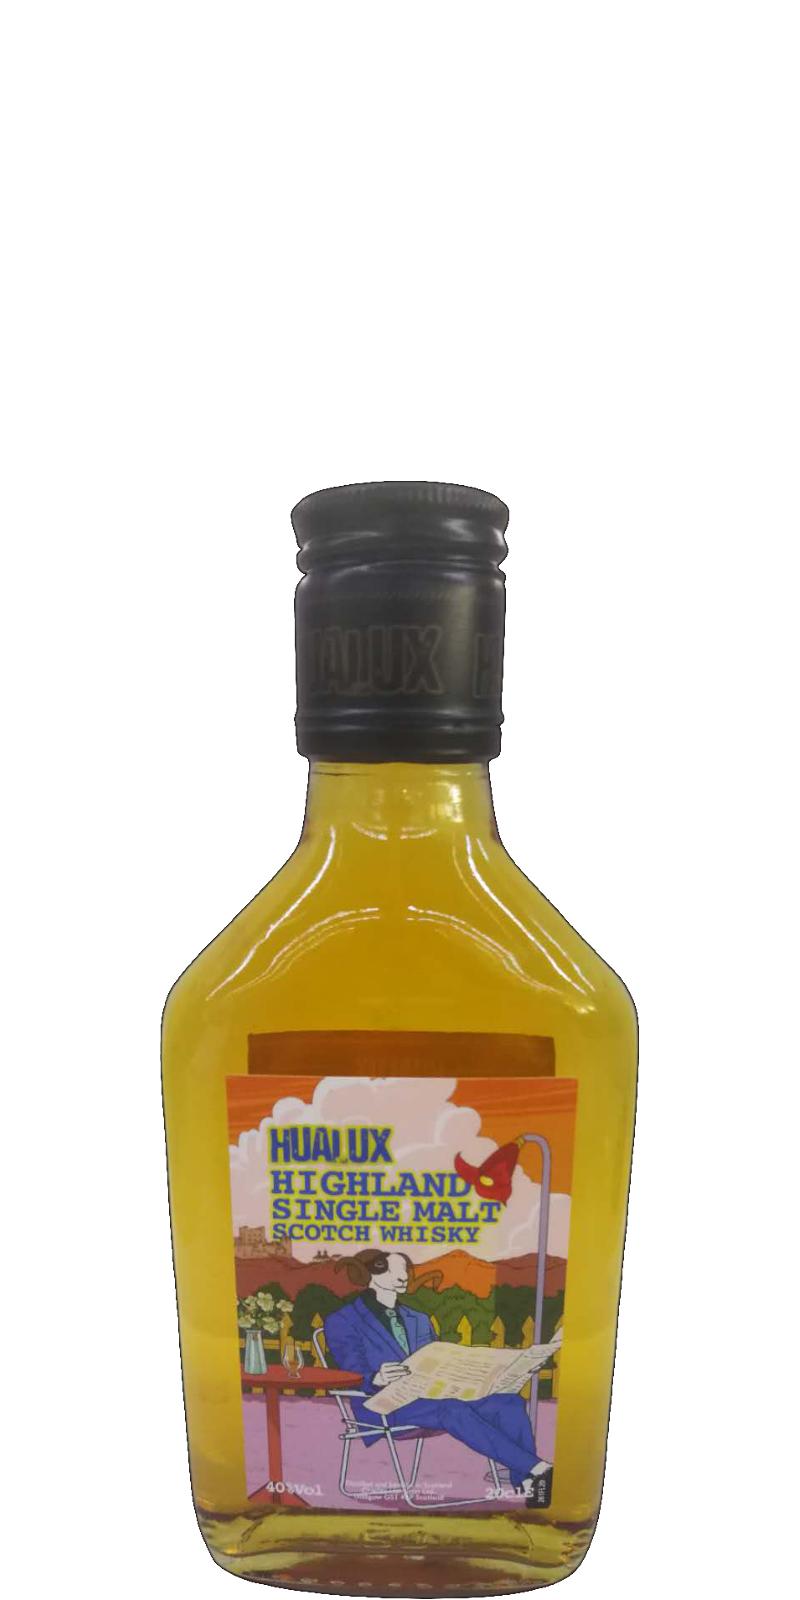 Hualux Highland Single Malt Scotch Whisky